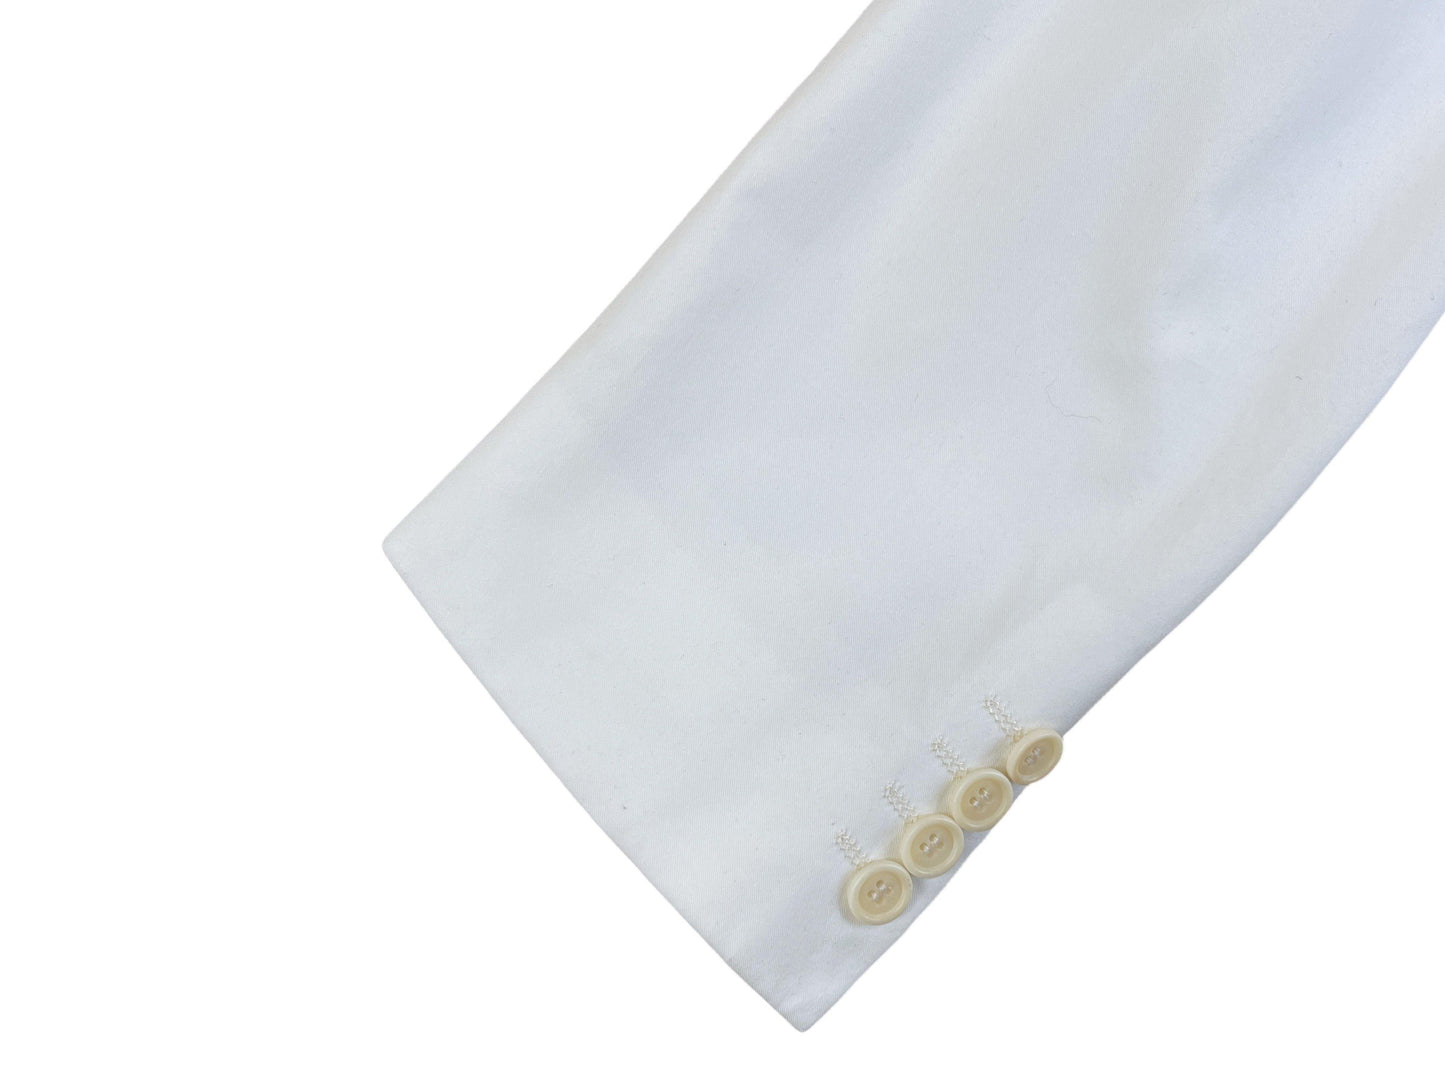 Coppley White Cotton Suit - 38R Genuine Design luxury consignment